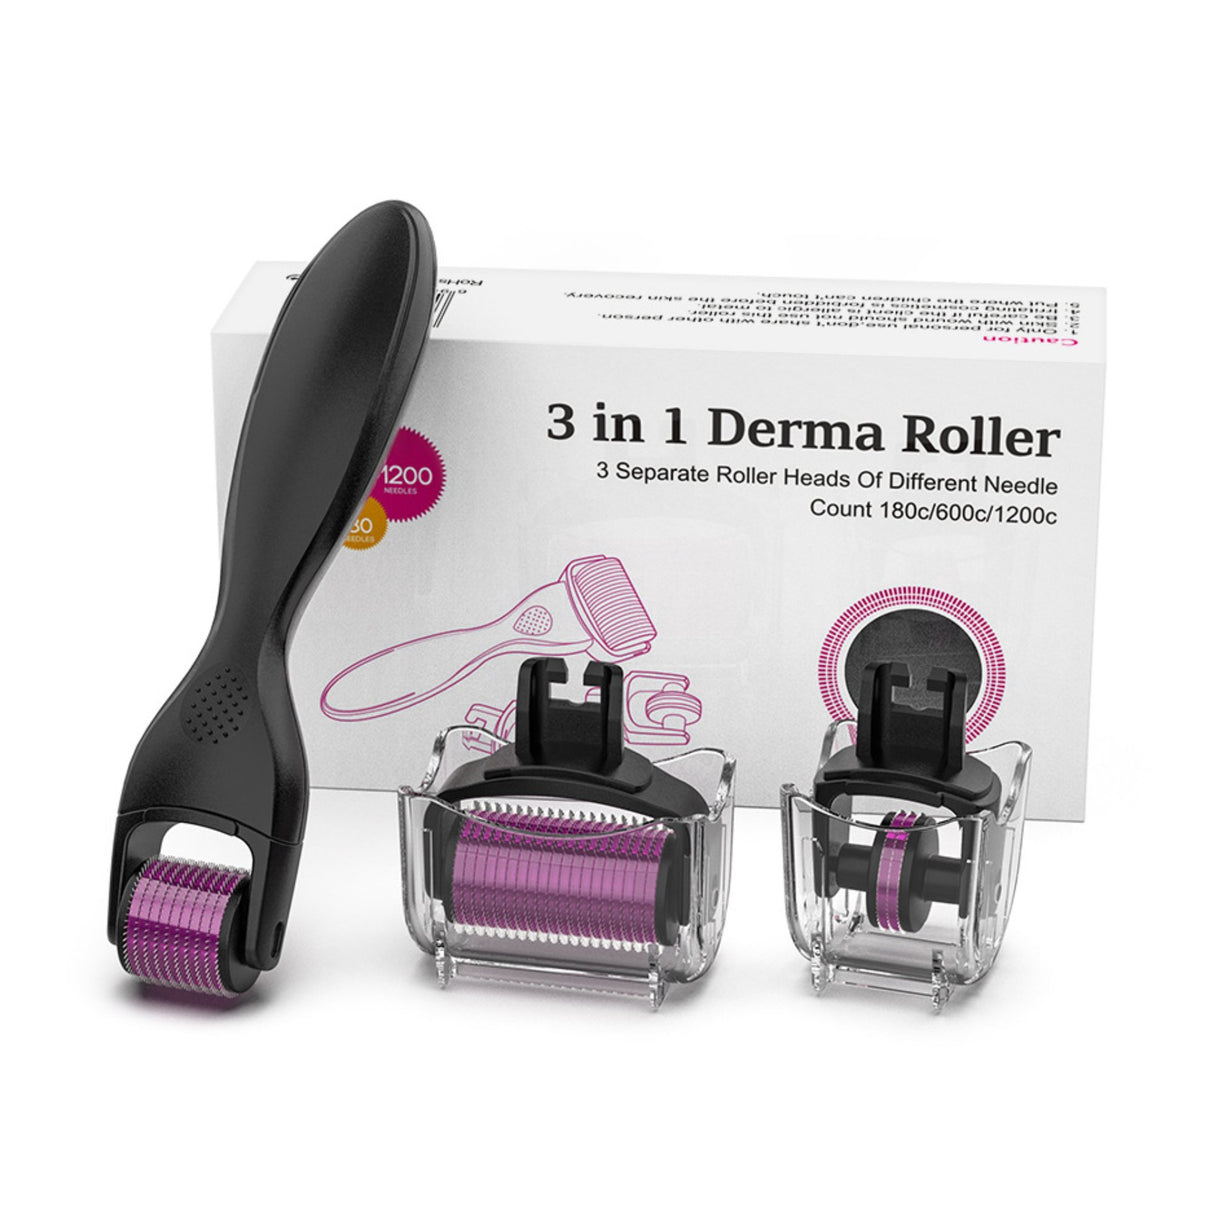 Derma Roller 3 in 1 Kit 600 Microneedles - Filler Lux™ - Medical Device - Filler Lux